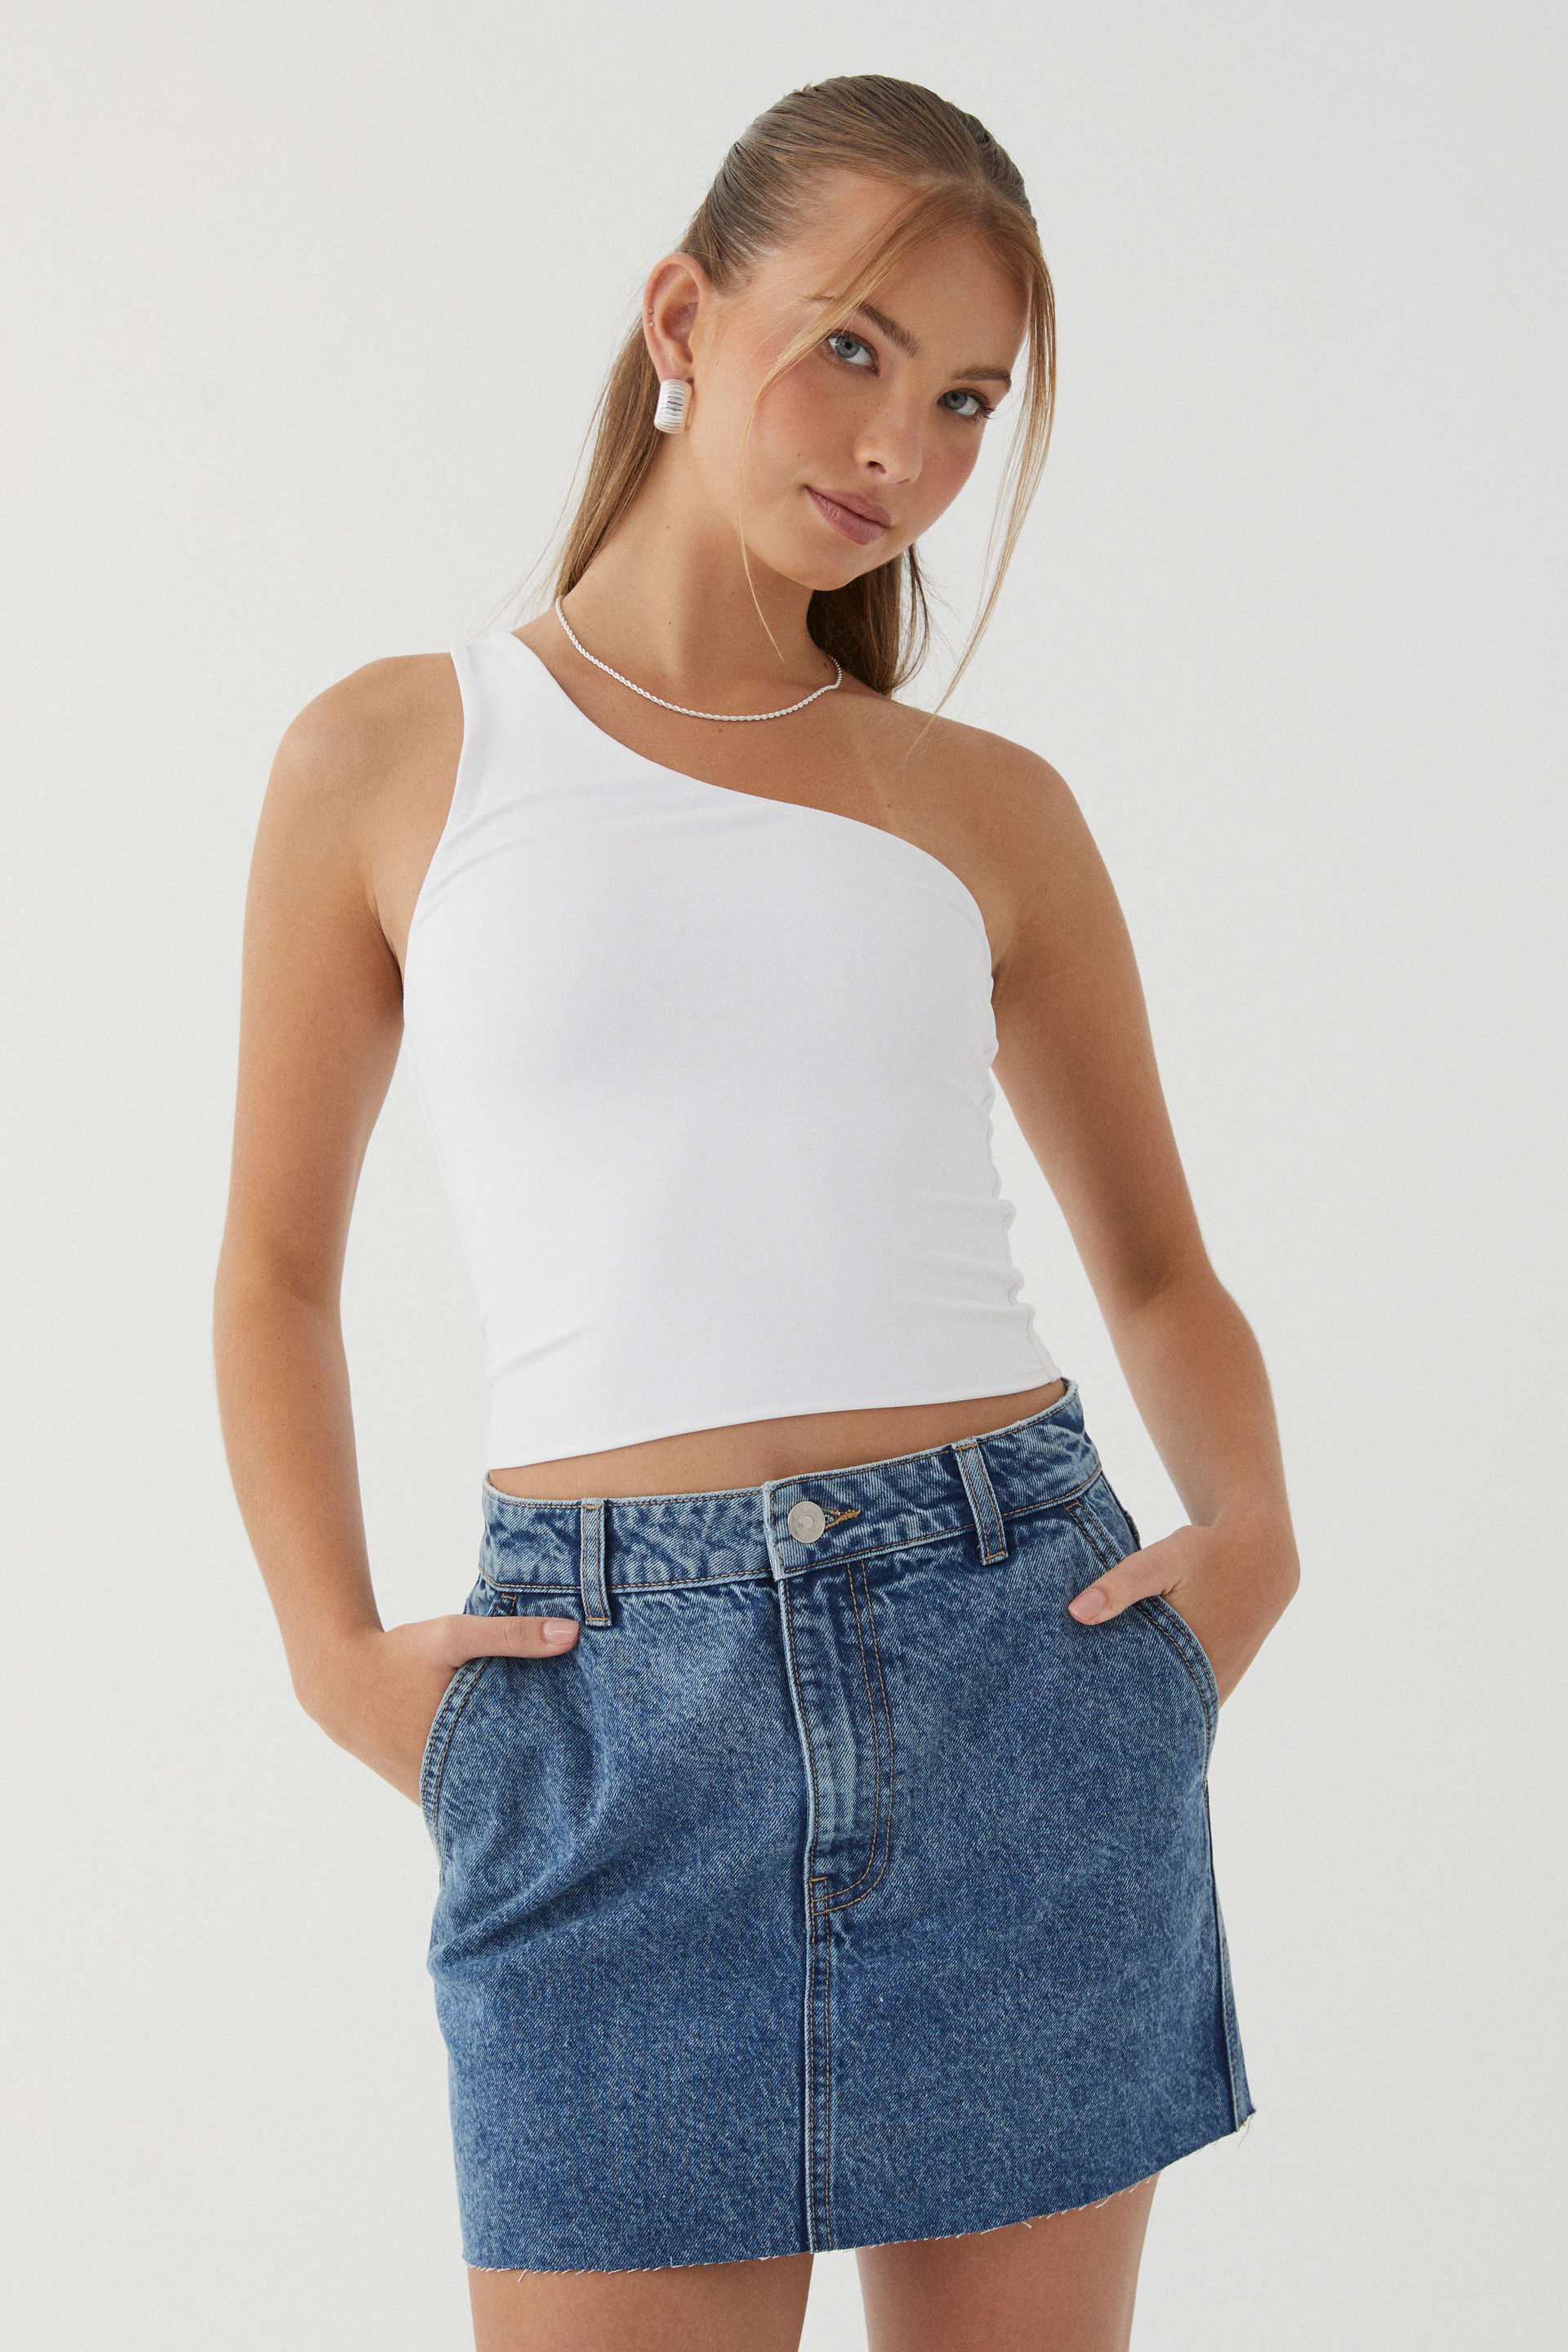 Denim Shop | Jeans, Skirts, Dresses and Shirts | Freemans